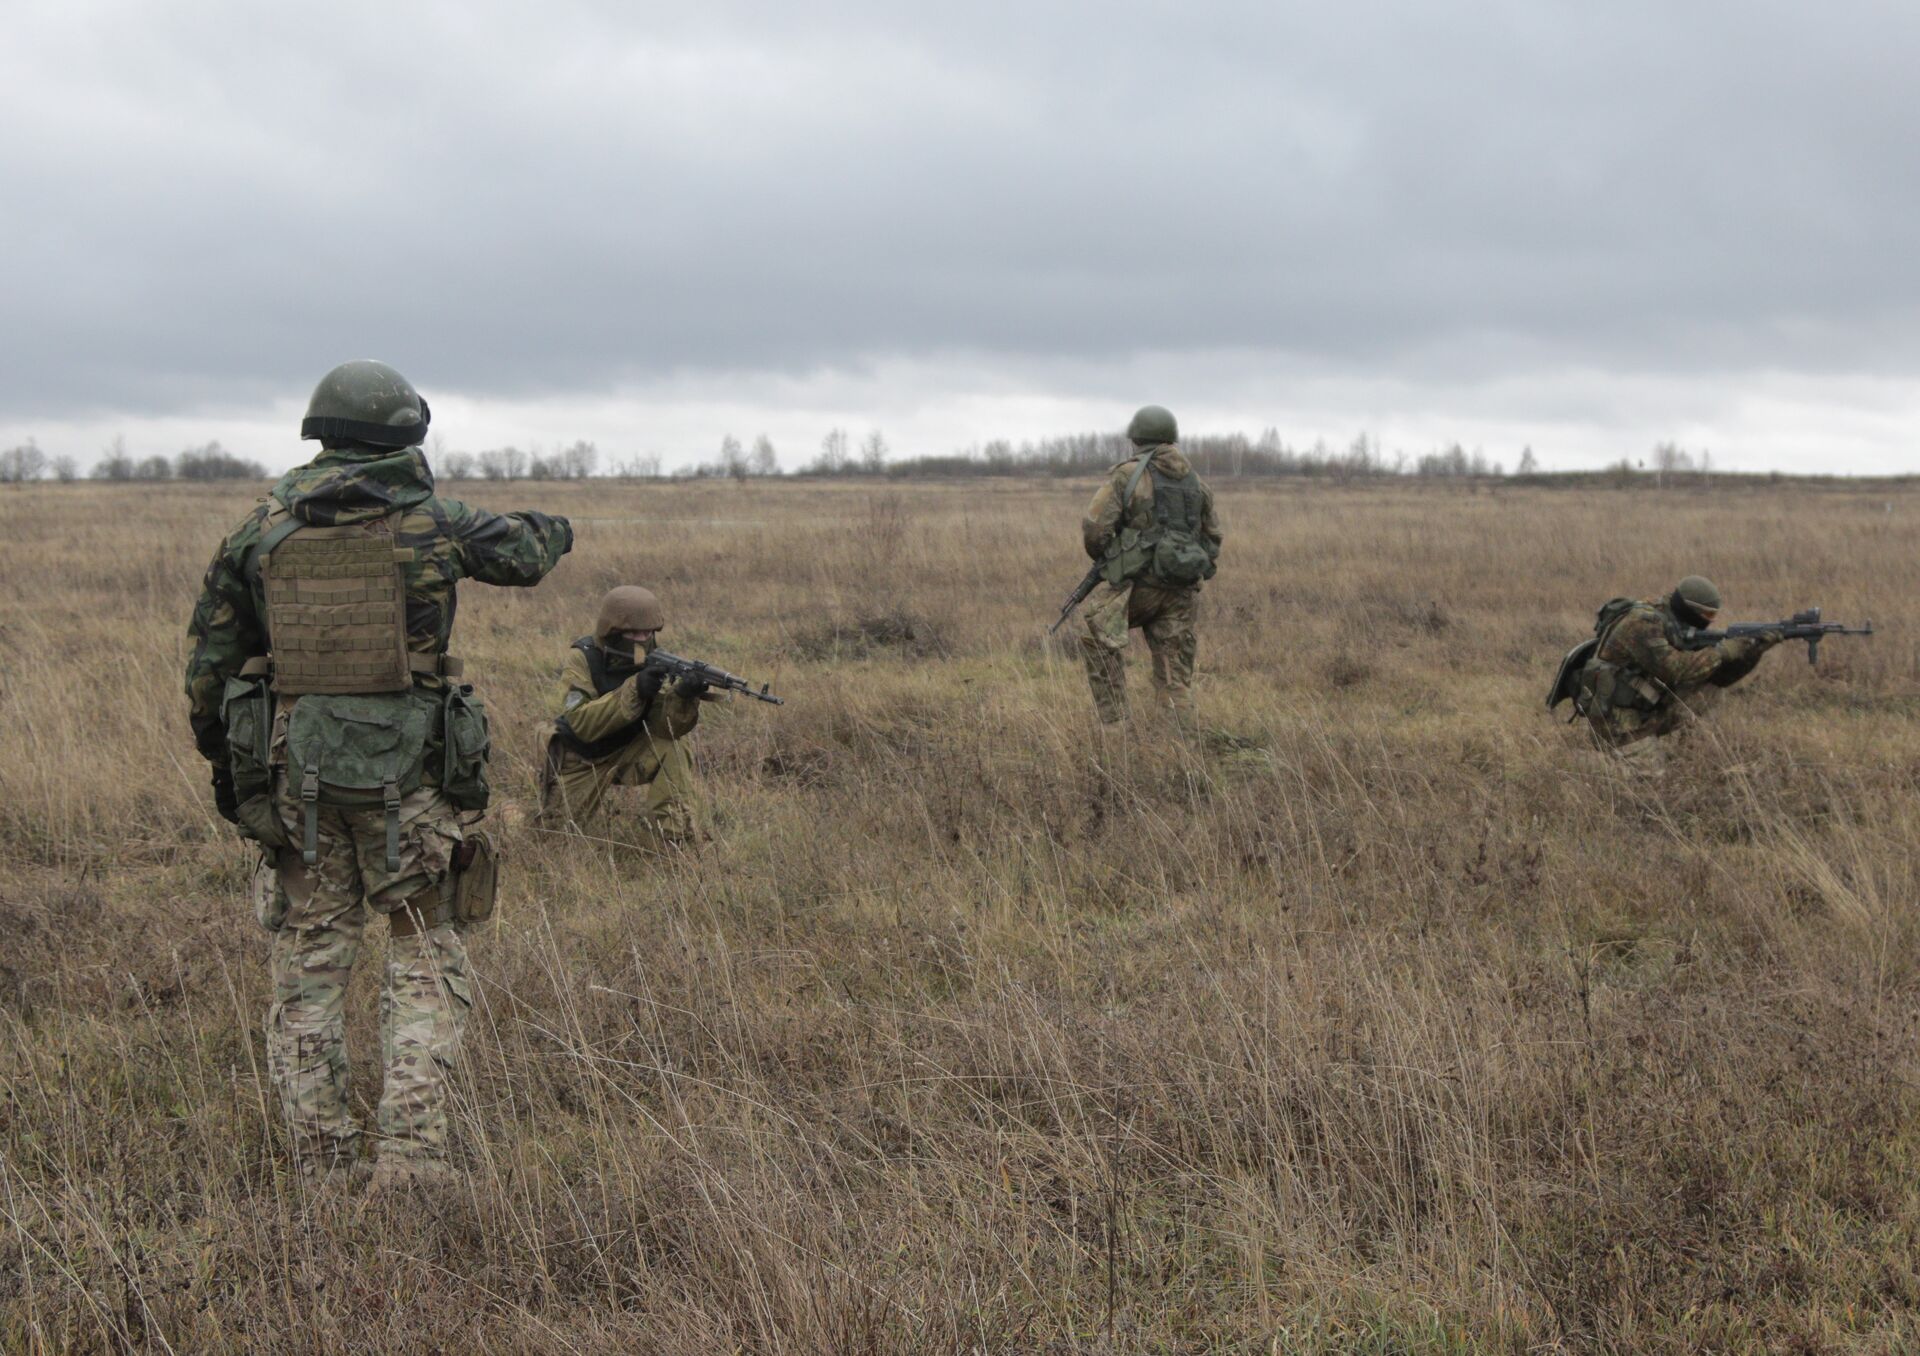  (File) US special forces instructor, left, trains Ukrainian soldiers at the military training ground in Ukraine's Khmelnitsk region Saturday, Nov. 21, 2015 - Sputnik International, 1920, 11.12.2021